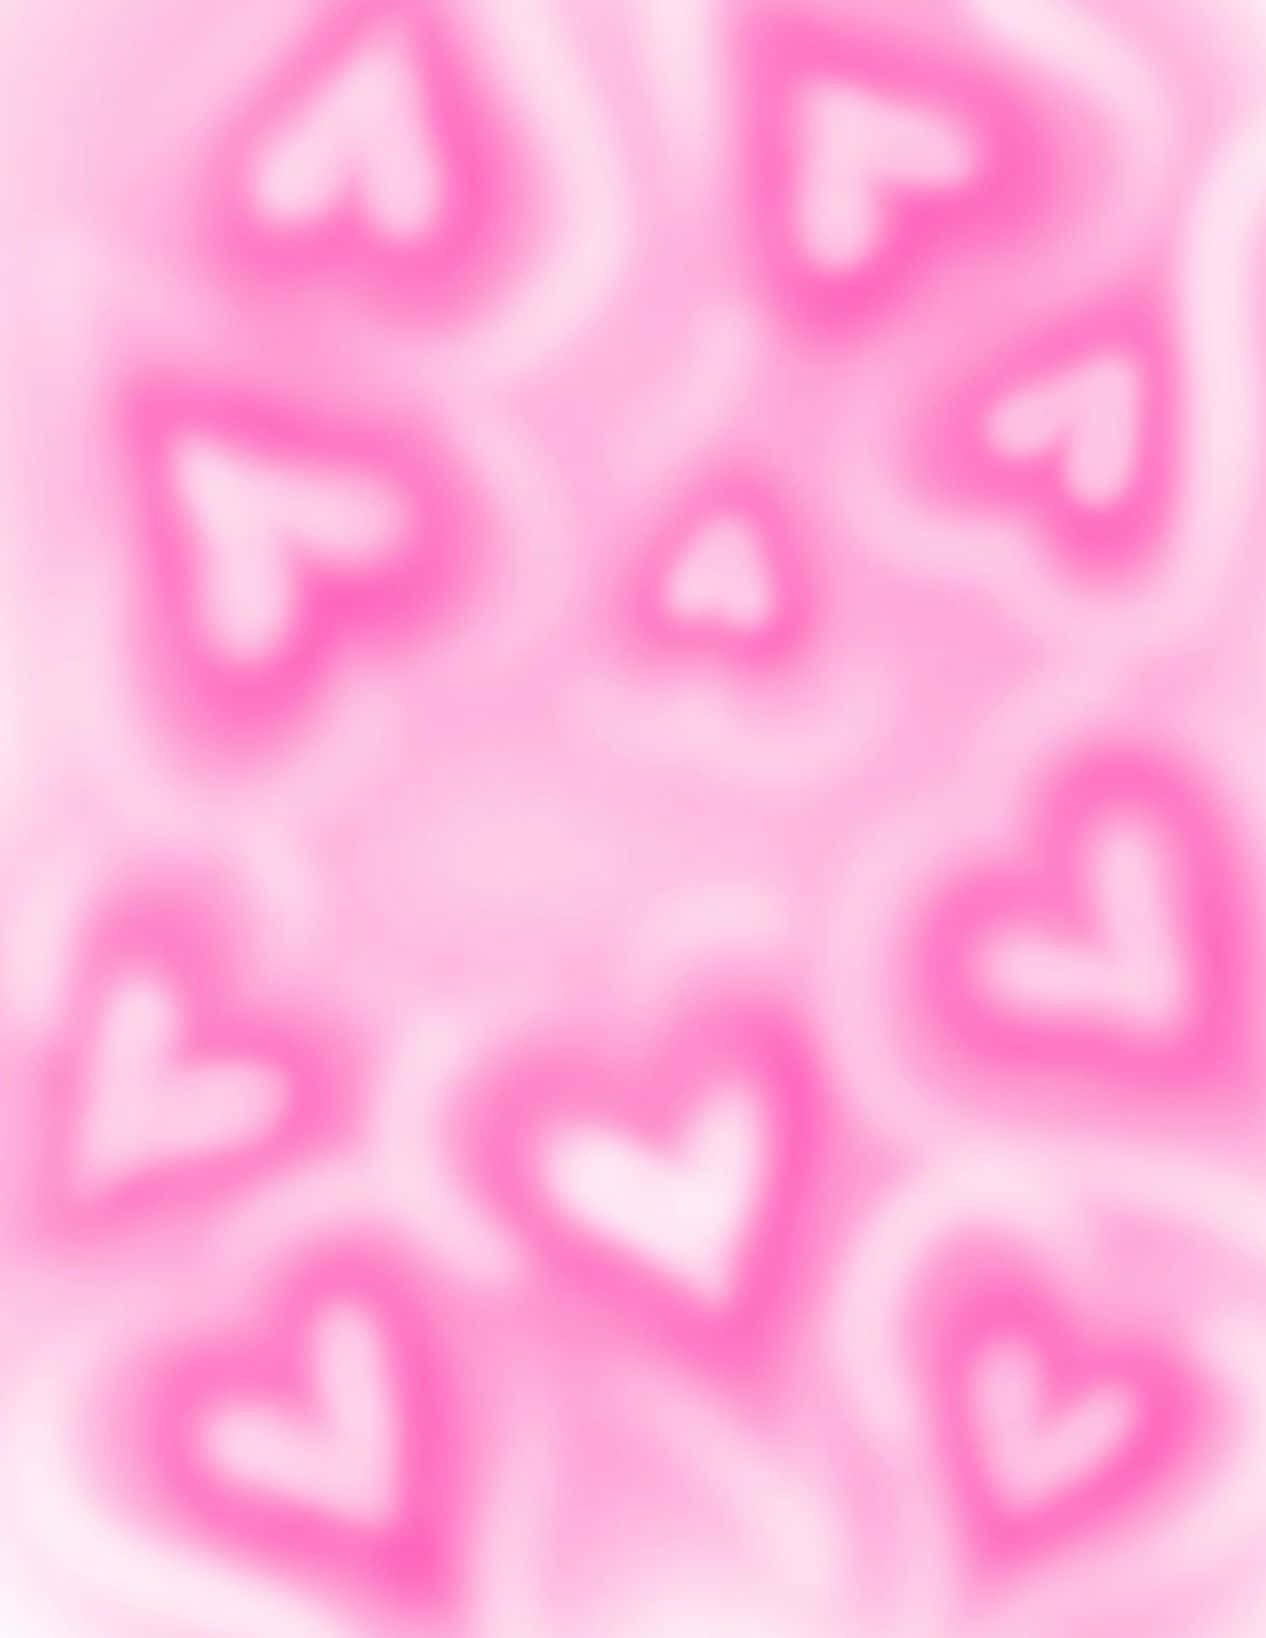 Pink Hearts Blur Background Wallpaper